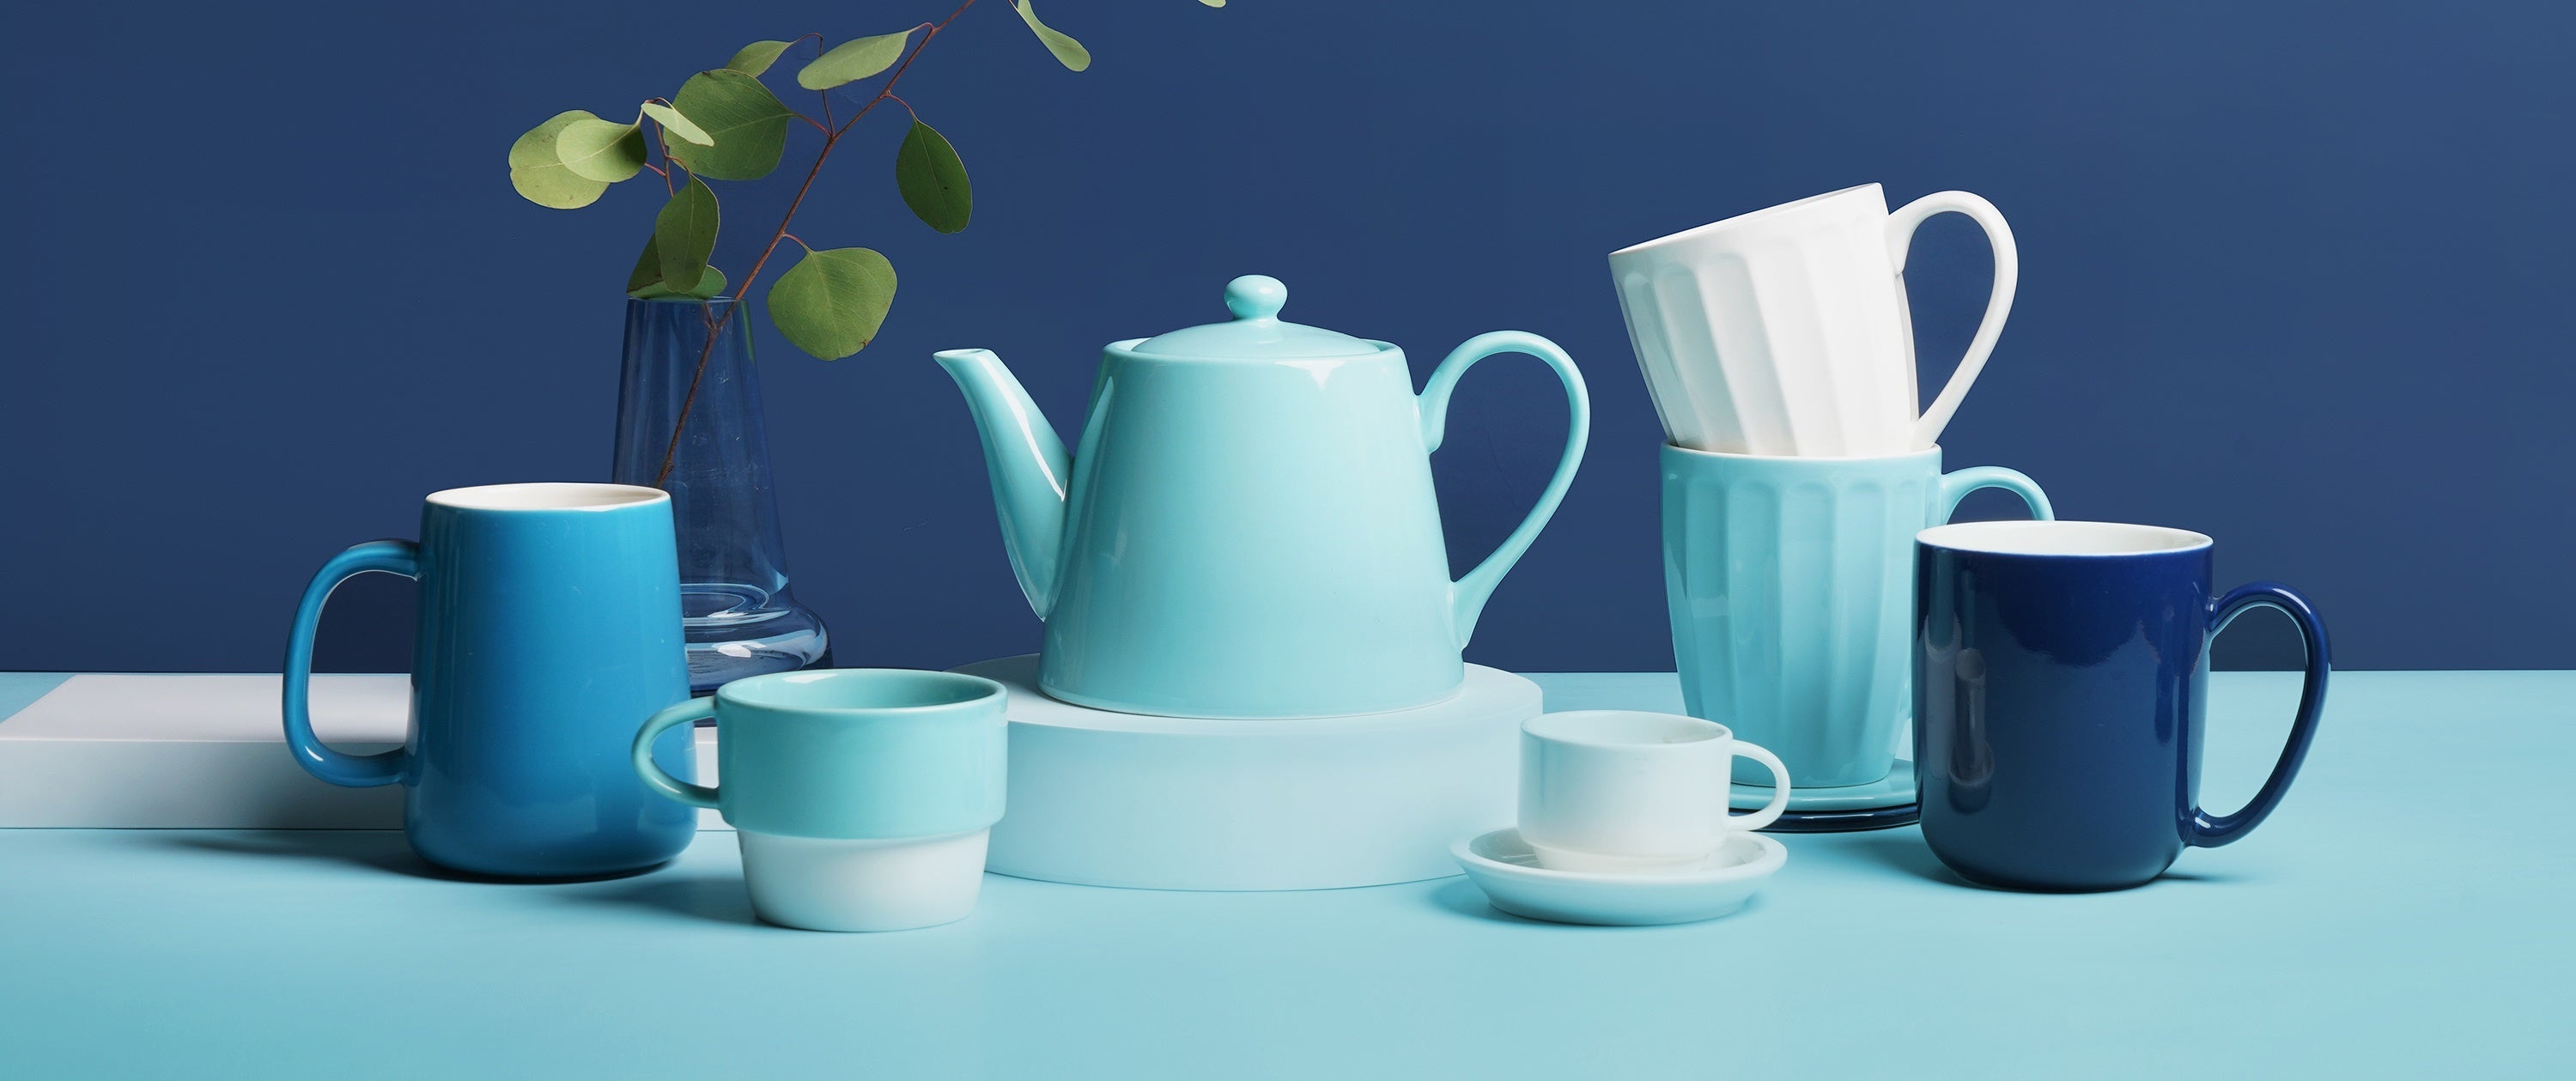 Large Pottery Coffee Mug 16 oz - Ceramic Tea Cup - Soup Mug with Handle - 1 Pcs (Green to Blue)